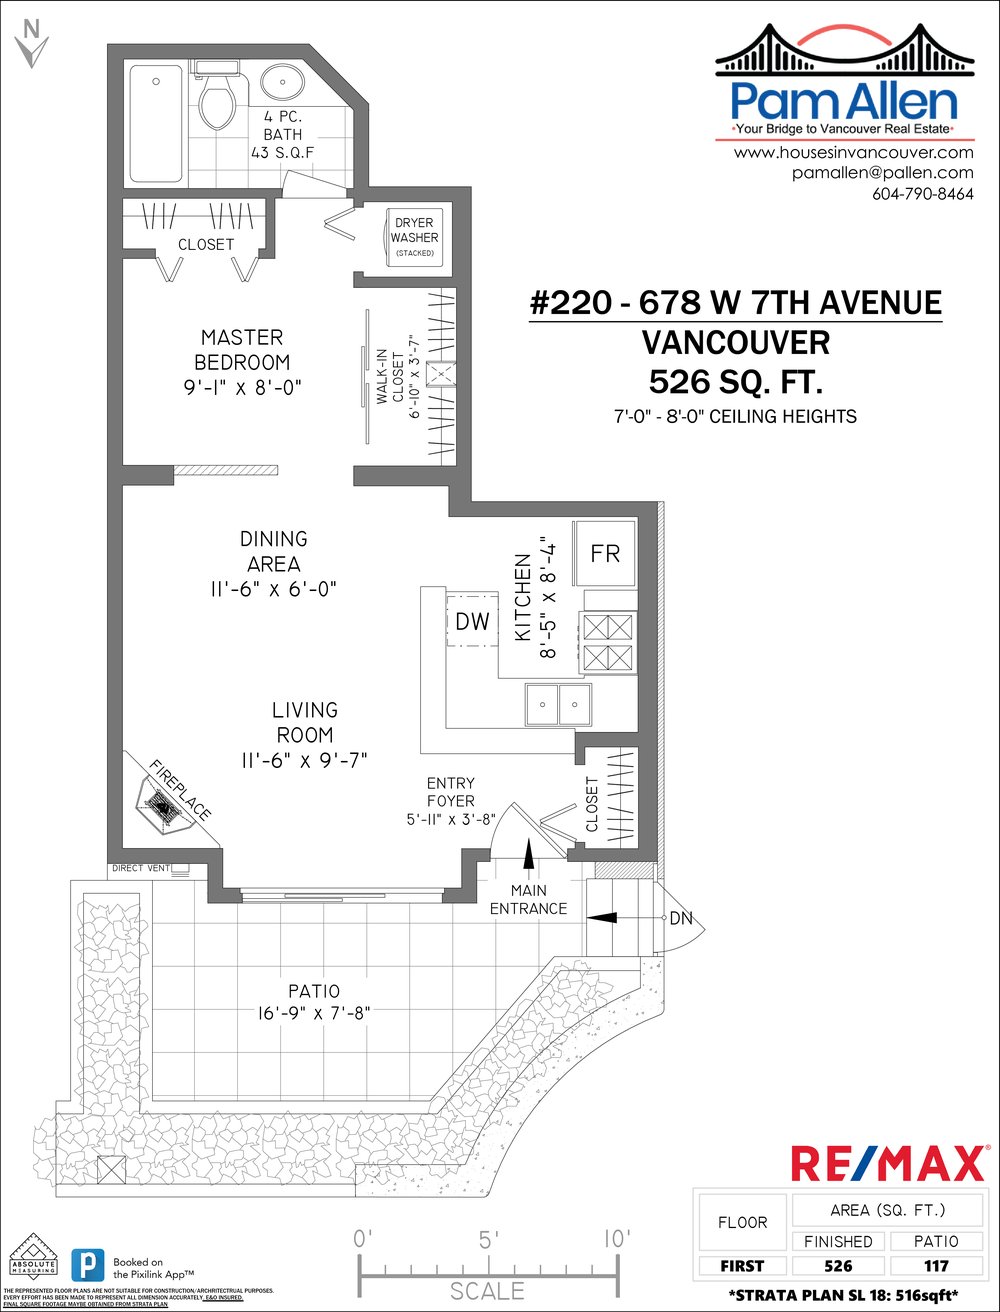 Floor Plan for a 1 Bedroom Townhouse in 